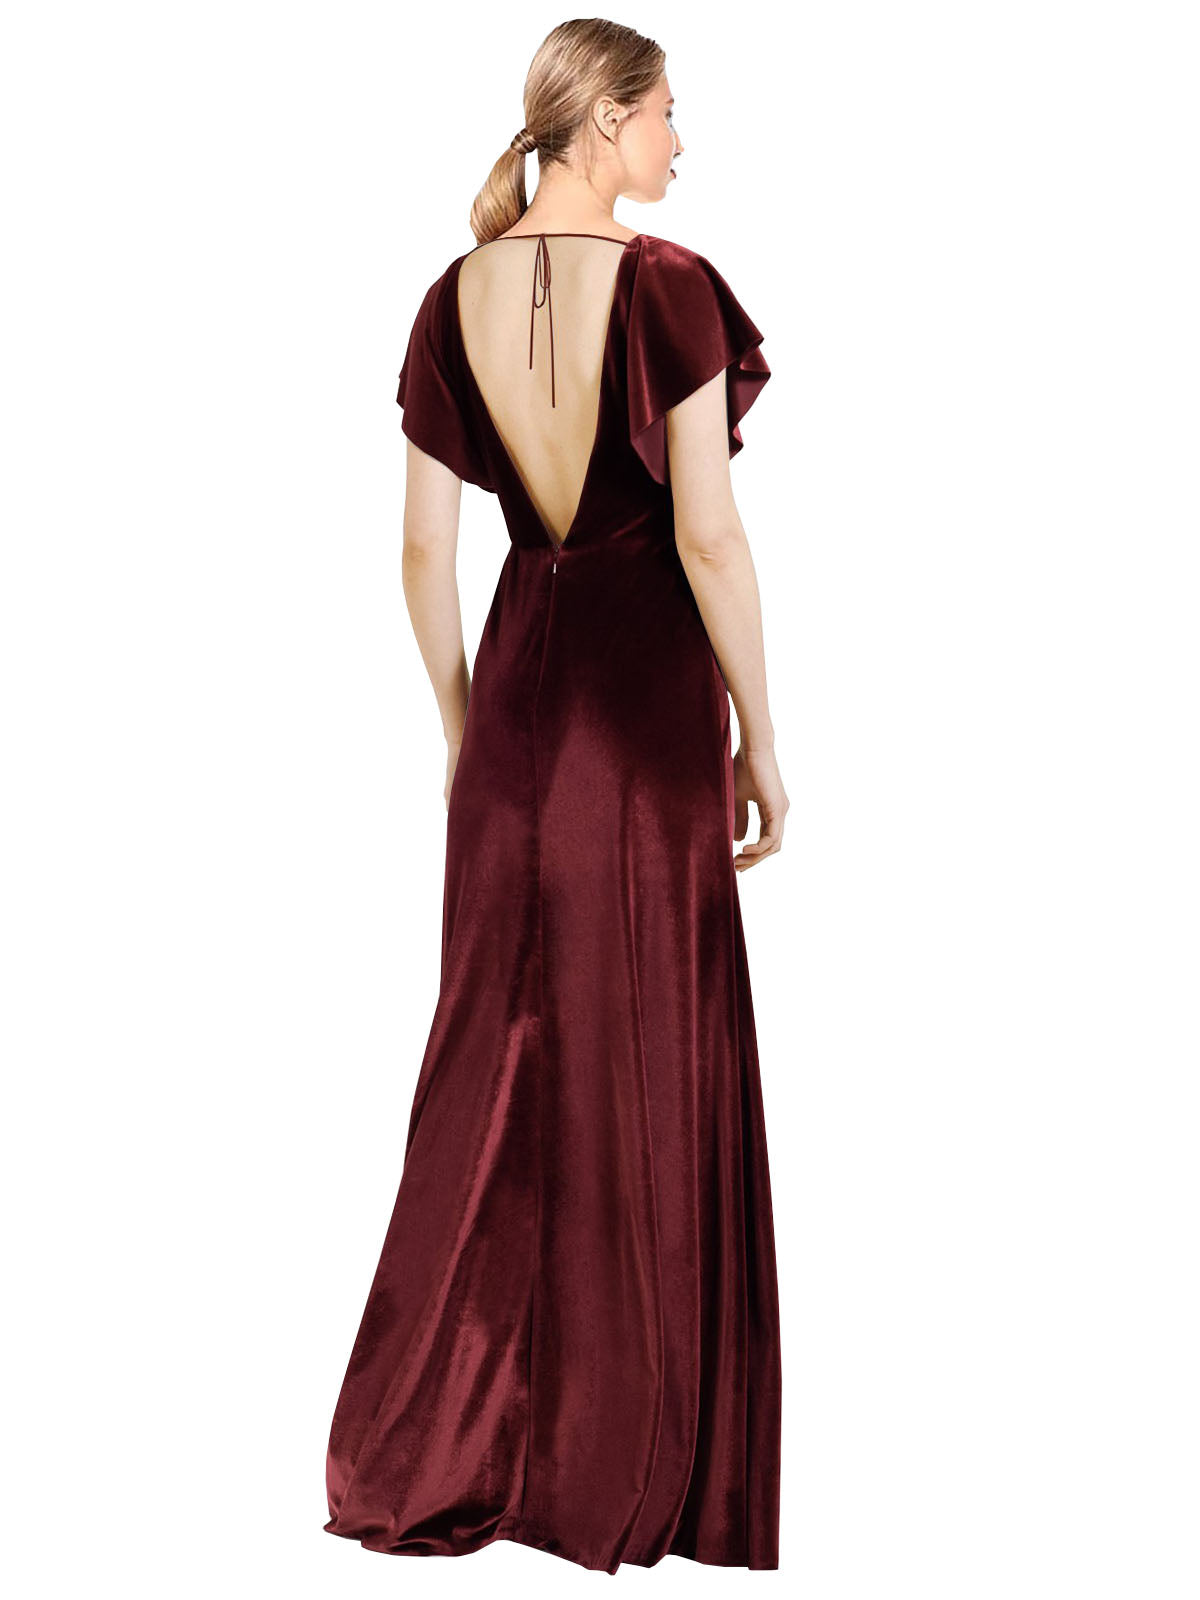 Burgundy A-Line V-Neck Long Sleeveless Stretch Velvet Bridesmaid Dress Pinto